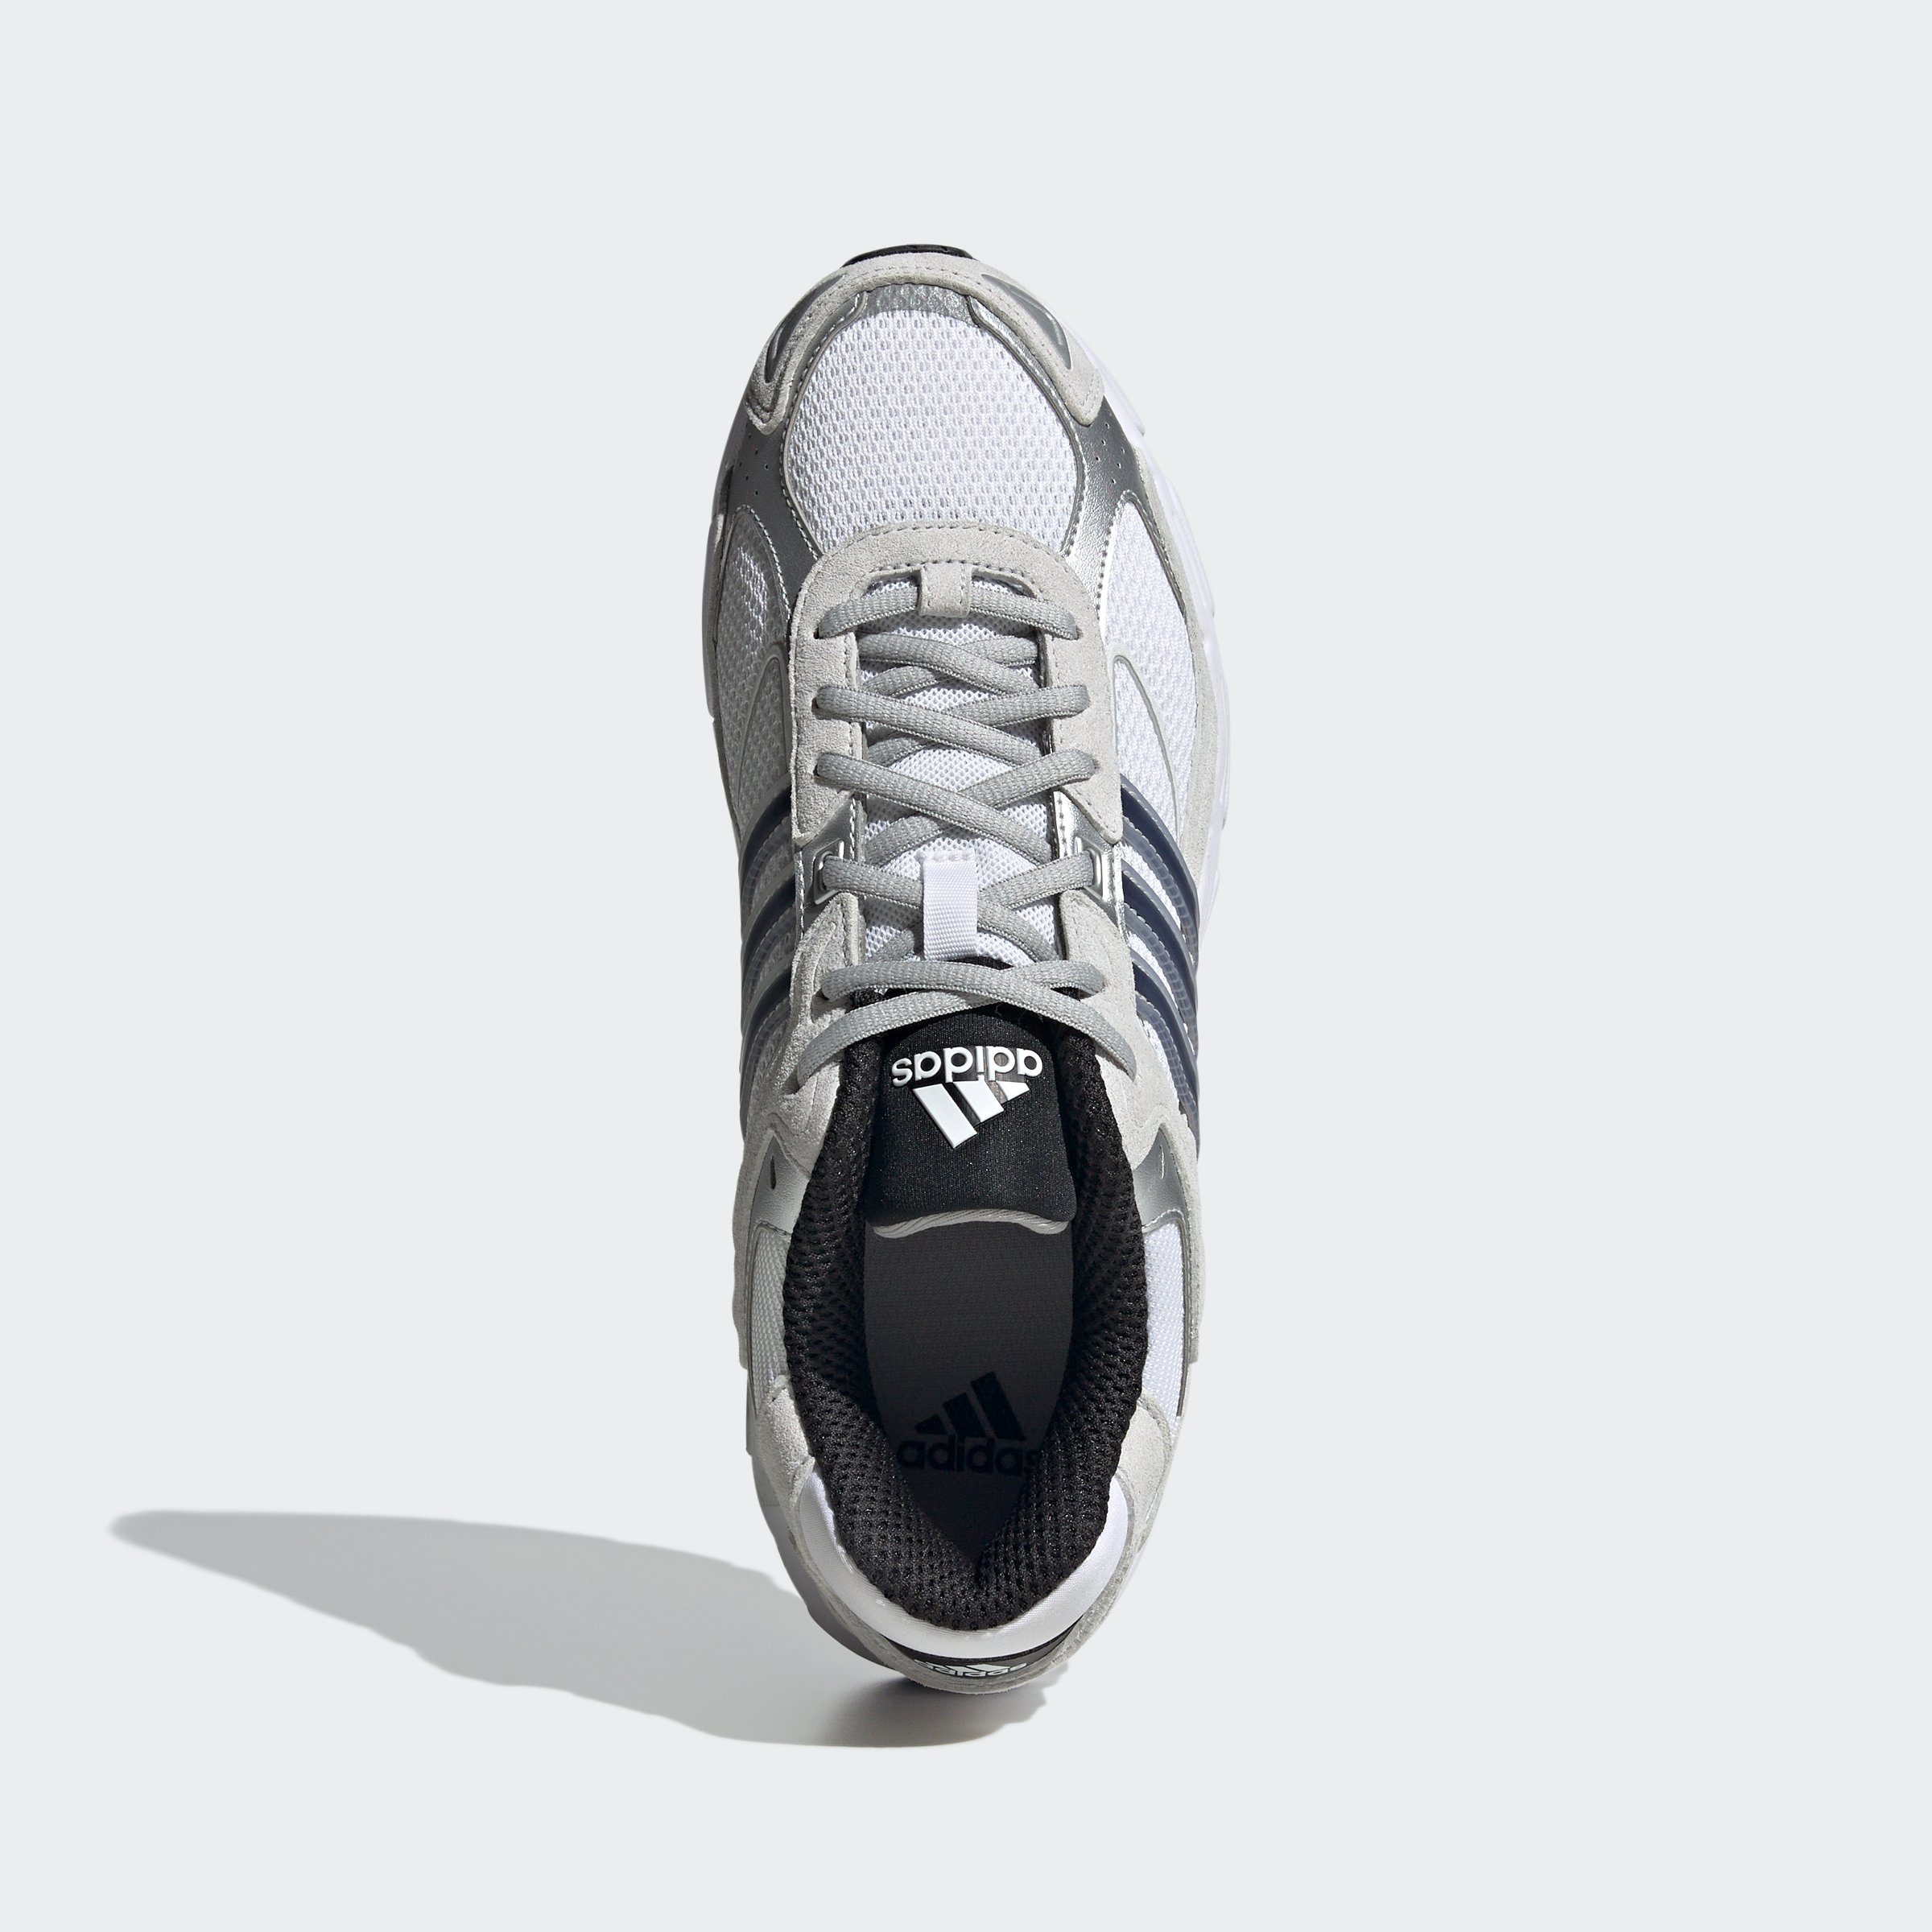 RESPONSE Black CL Cloud Core / / Two Sneaker Originals adidas Grey White